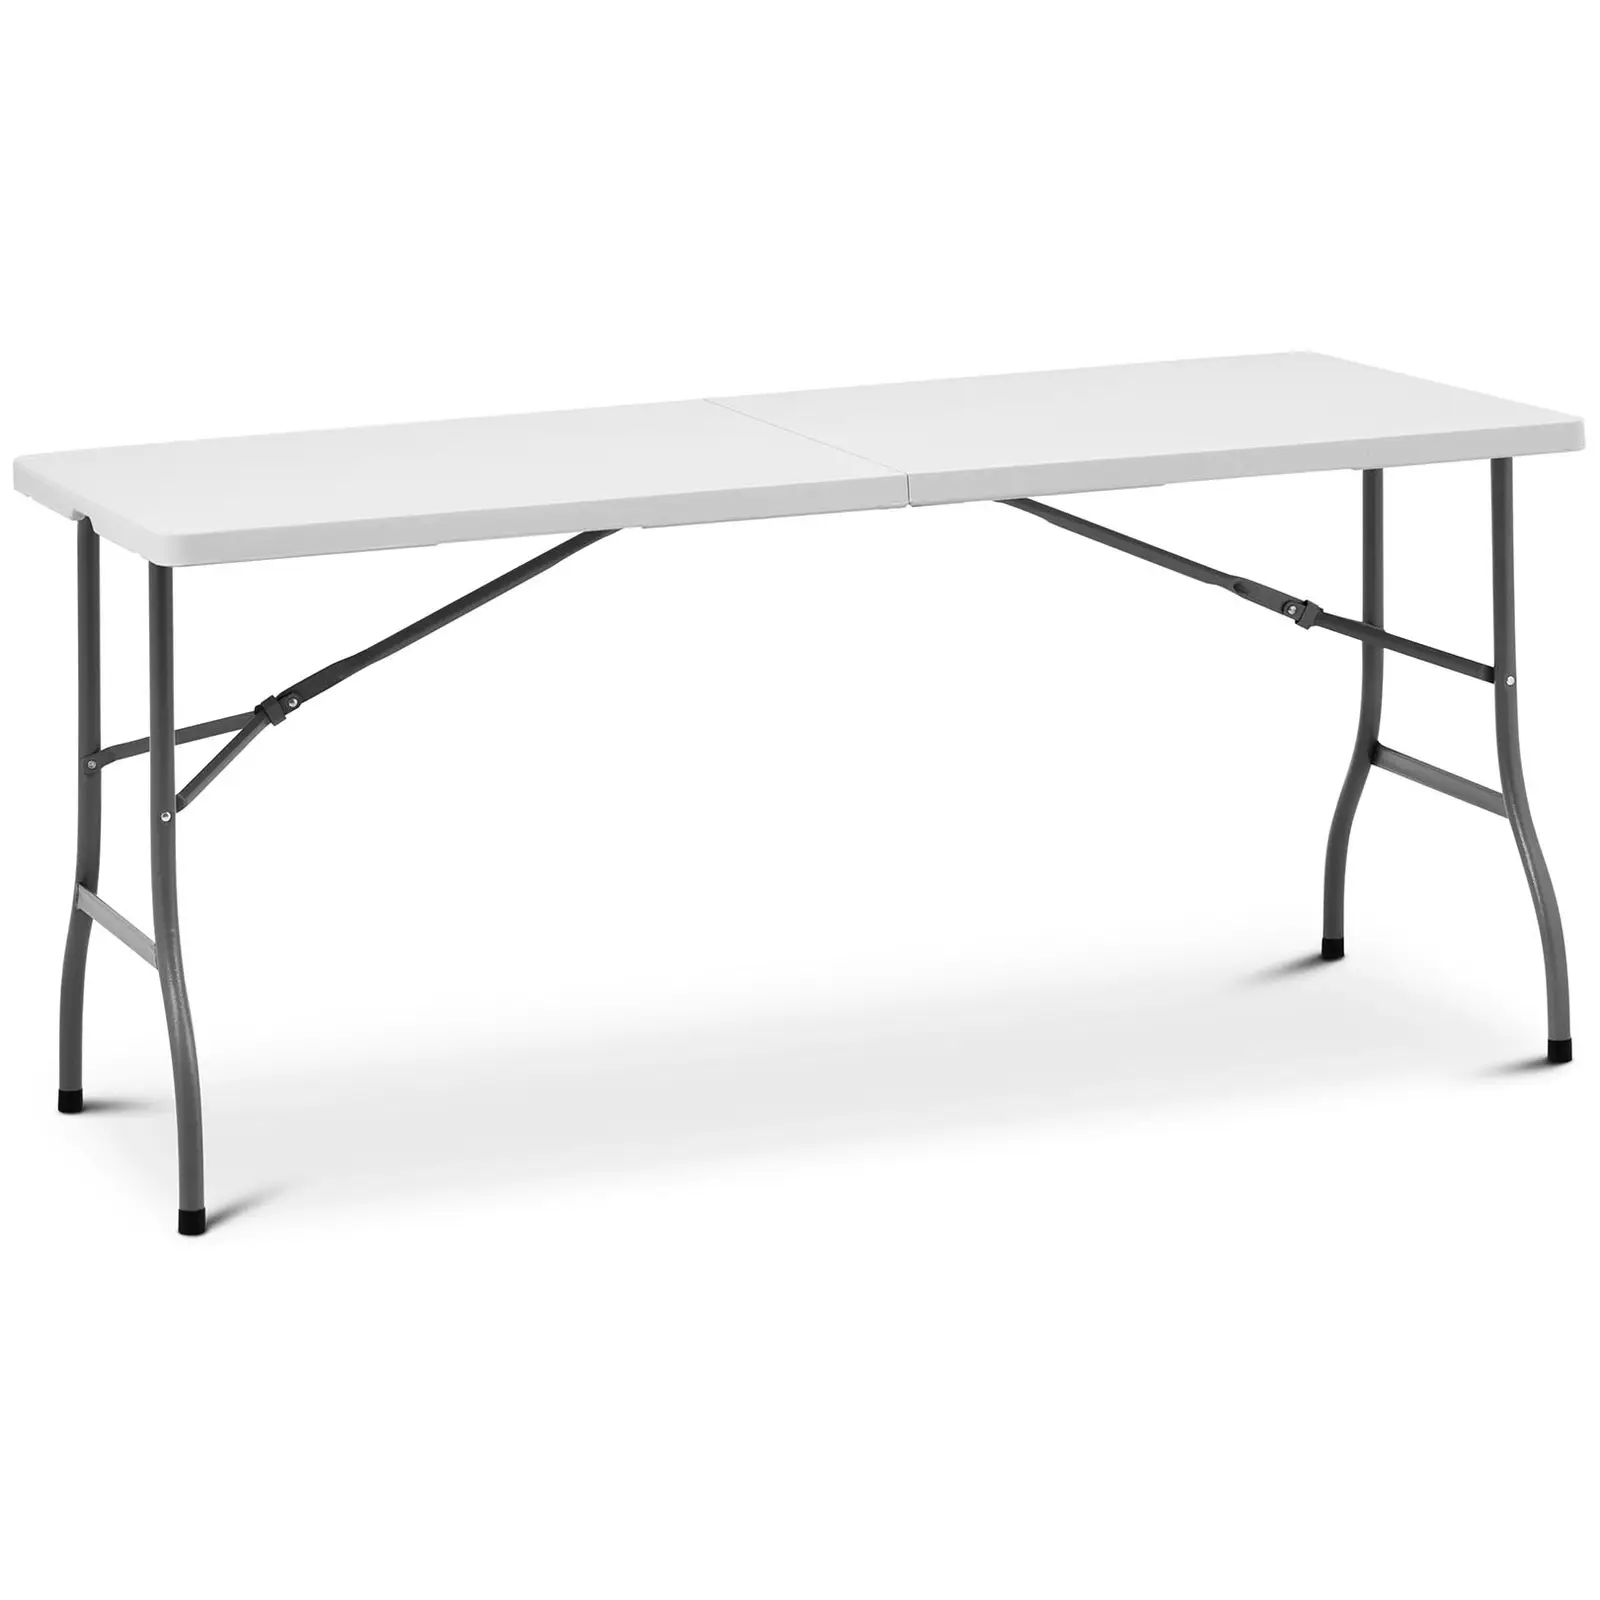 Folding Table - 1,520 x 700 x 740 mm - Royal Catering - 150 kg - inside/outside - White